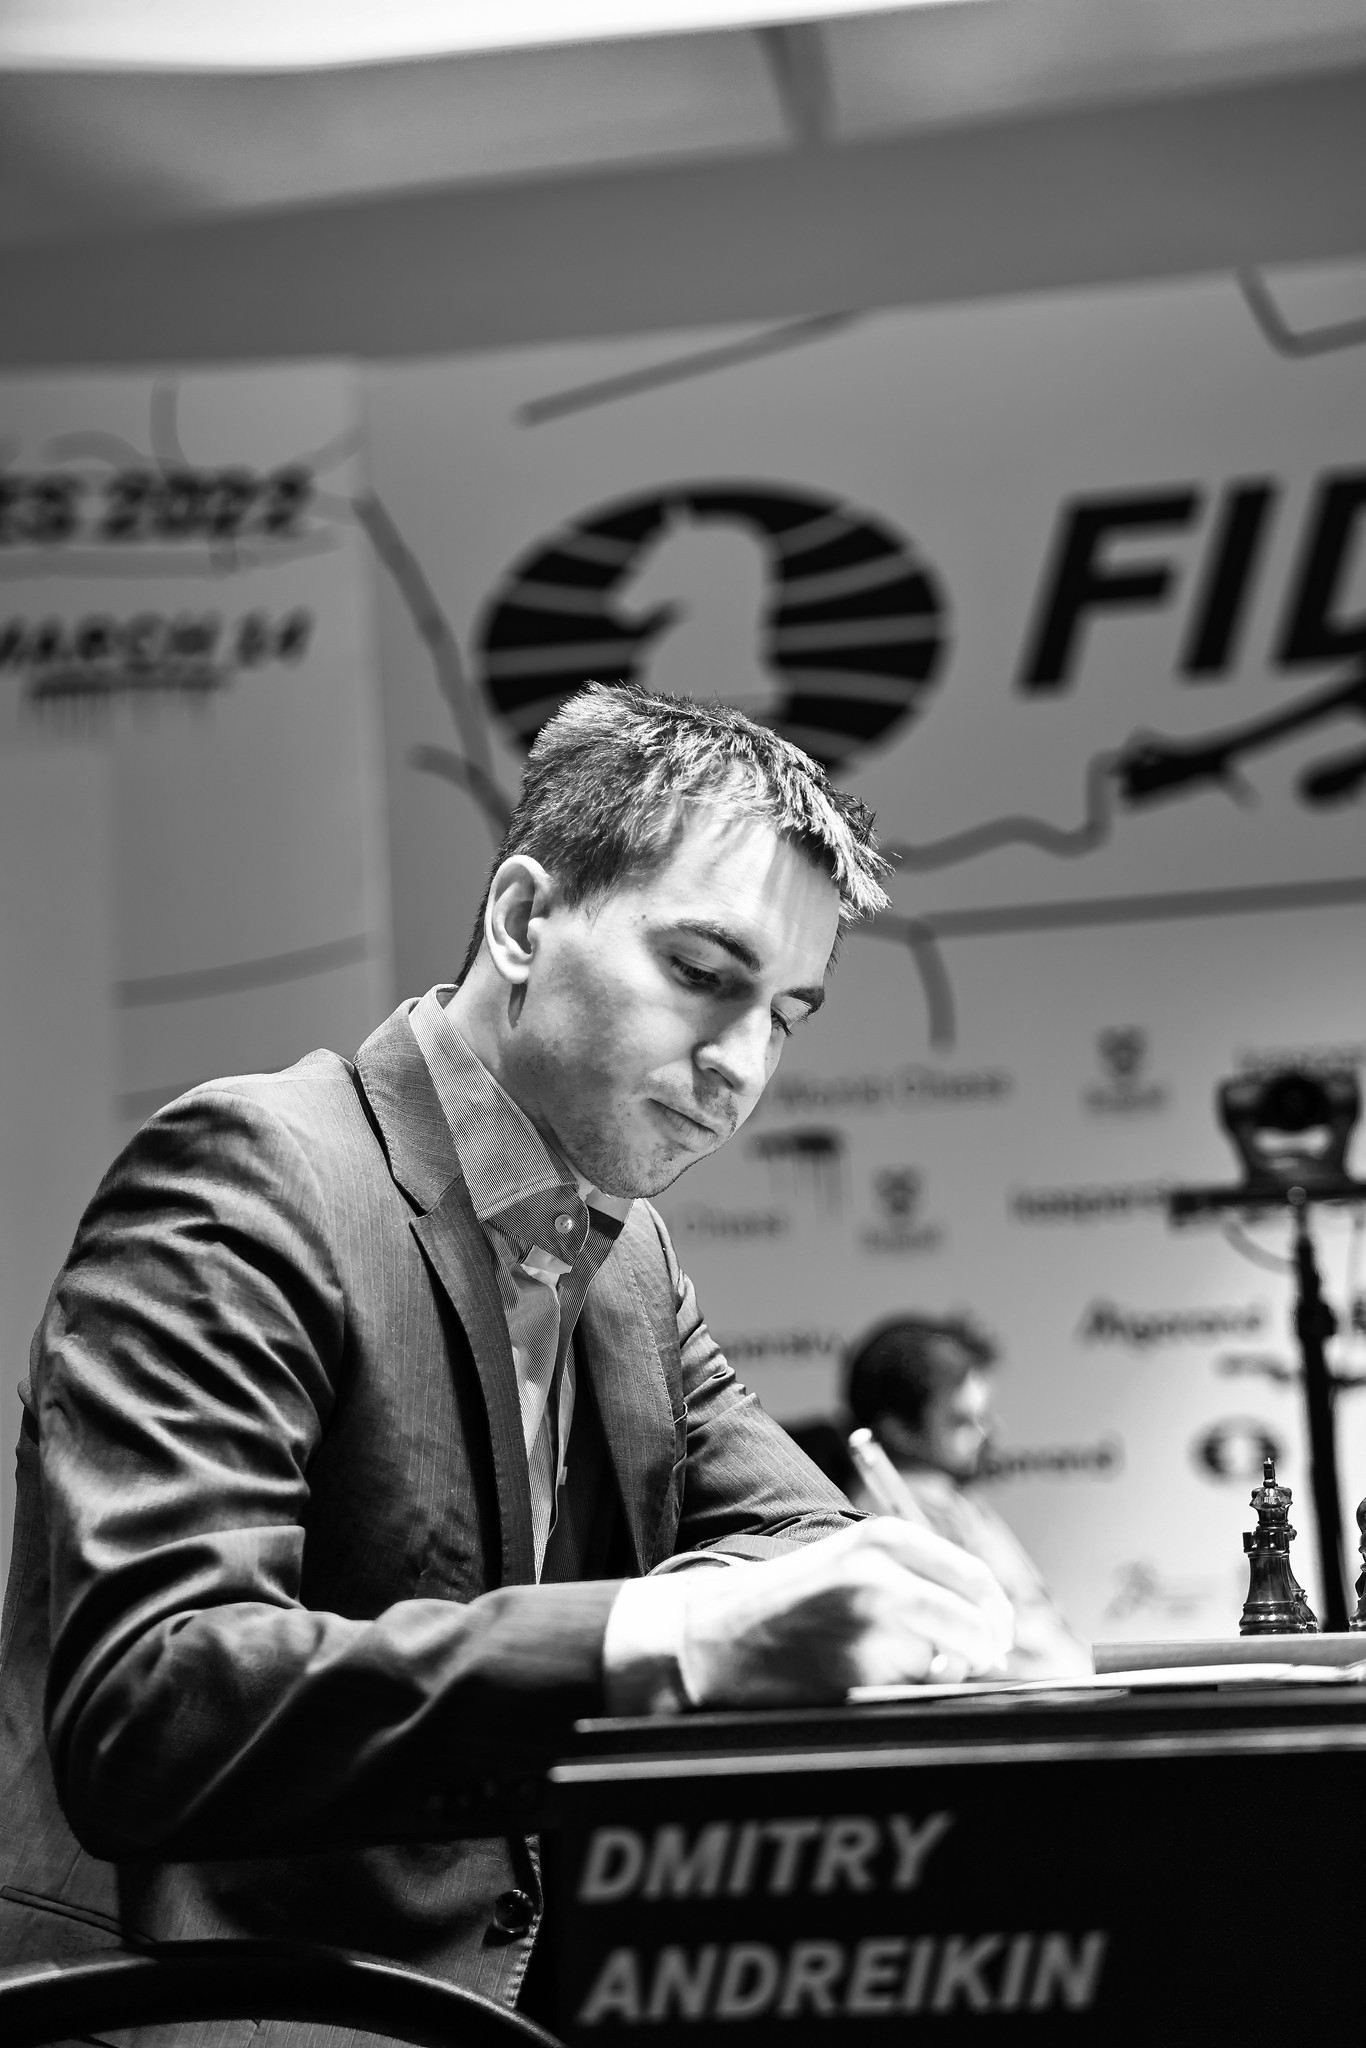 International Chess Federation on X: Dmitry Andreikin has